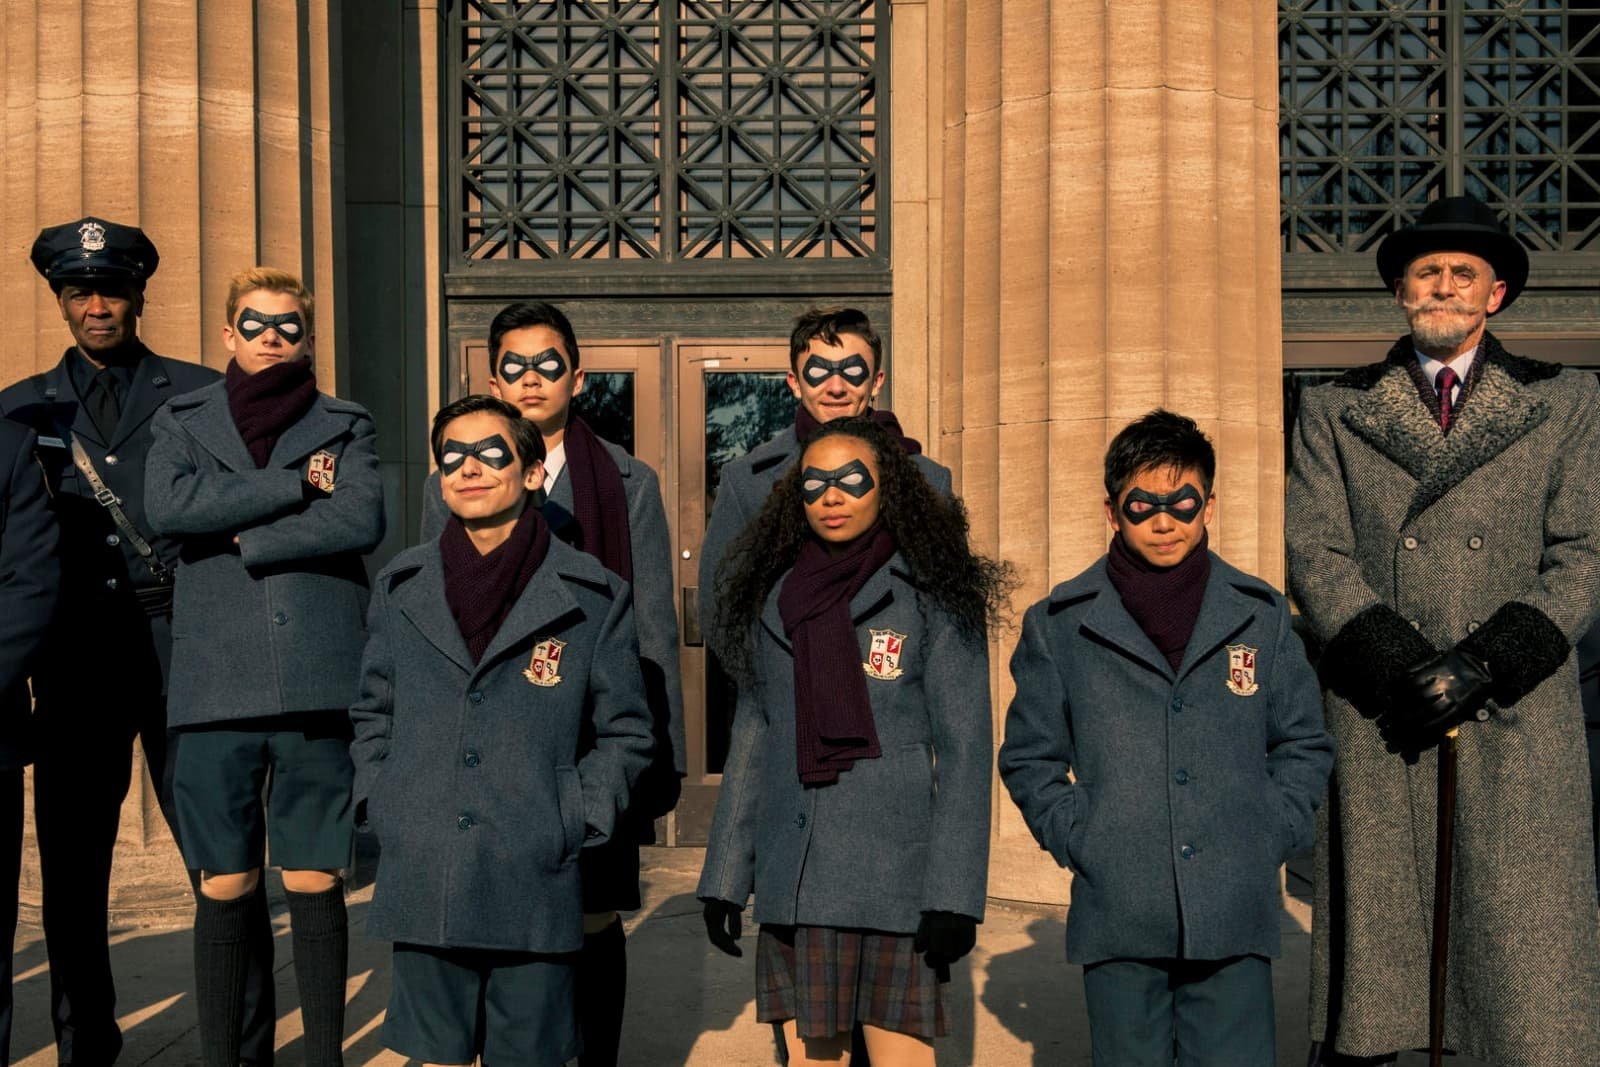 Netflix's 'Umbrella Academy' trailer showcases an offbeat superhero saga | DeviceDaily.com